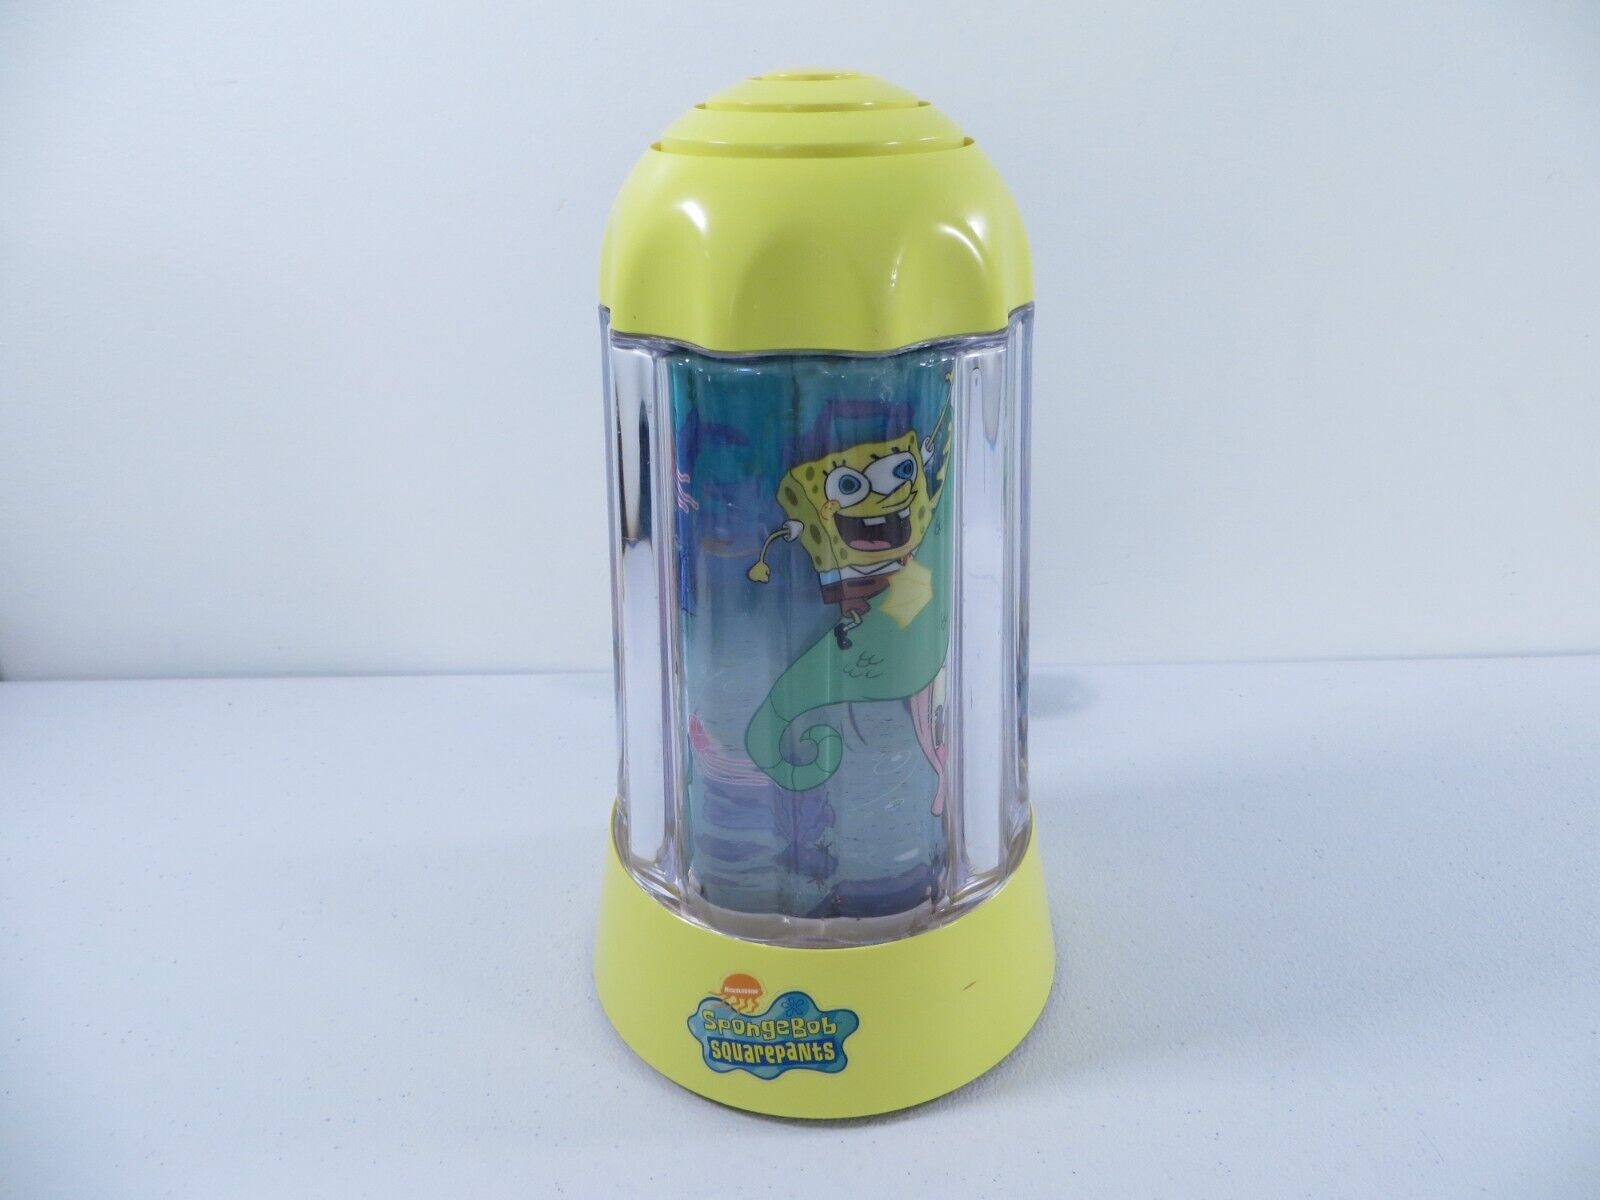 SpongeBob SquarePants 2004 Viacom Nickelodeon Rotating Motion Lamp Night Light